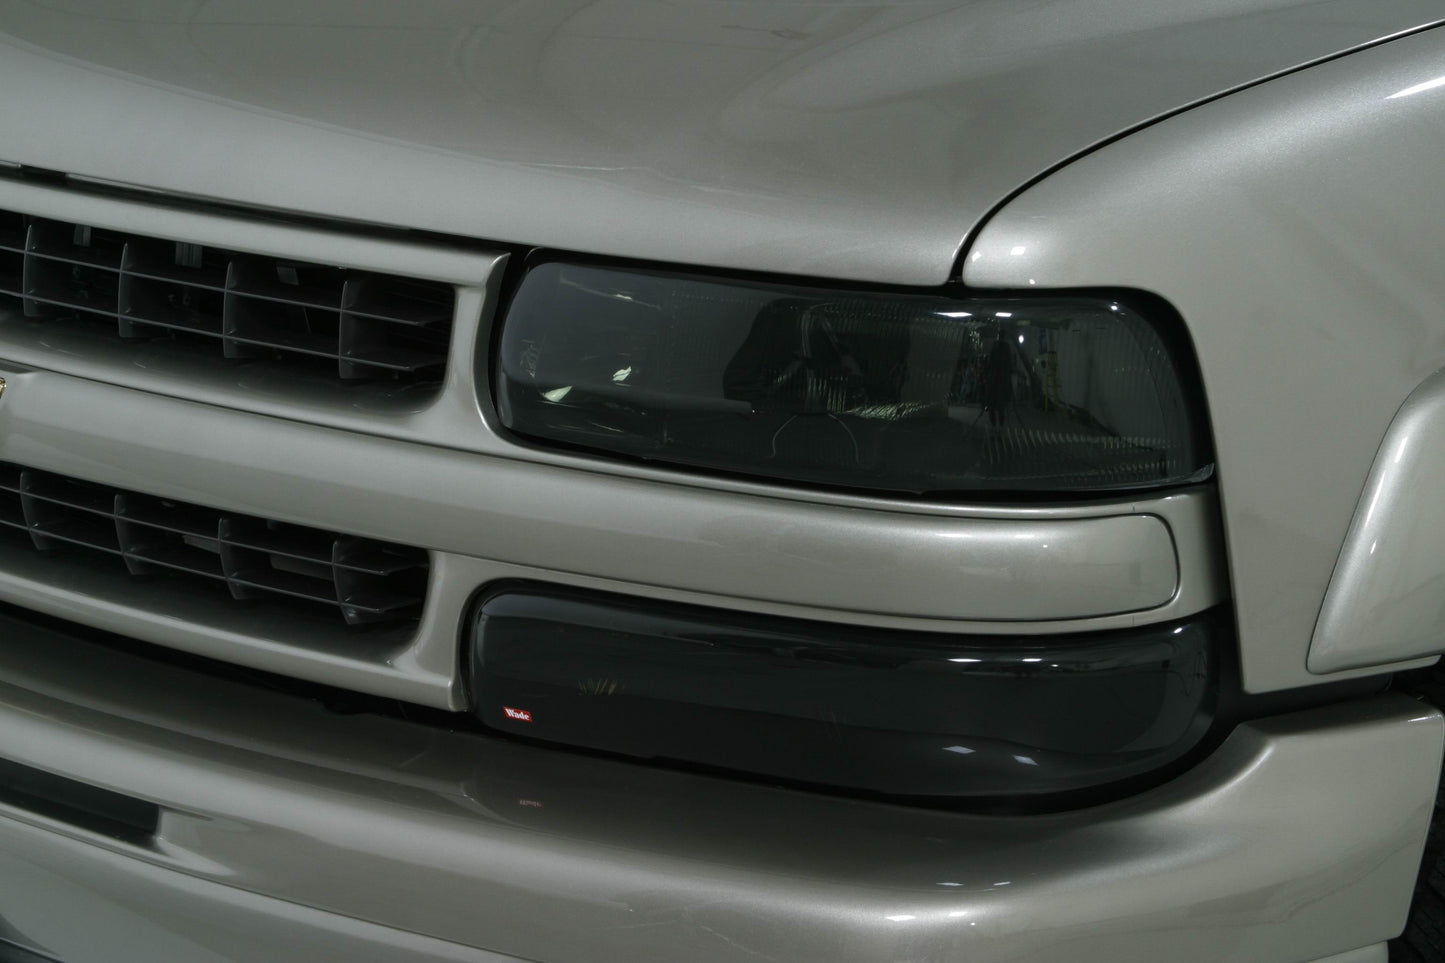 2002 Toyota Tundra Head Light Covers